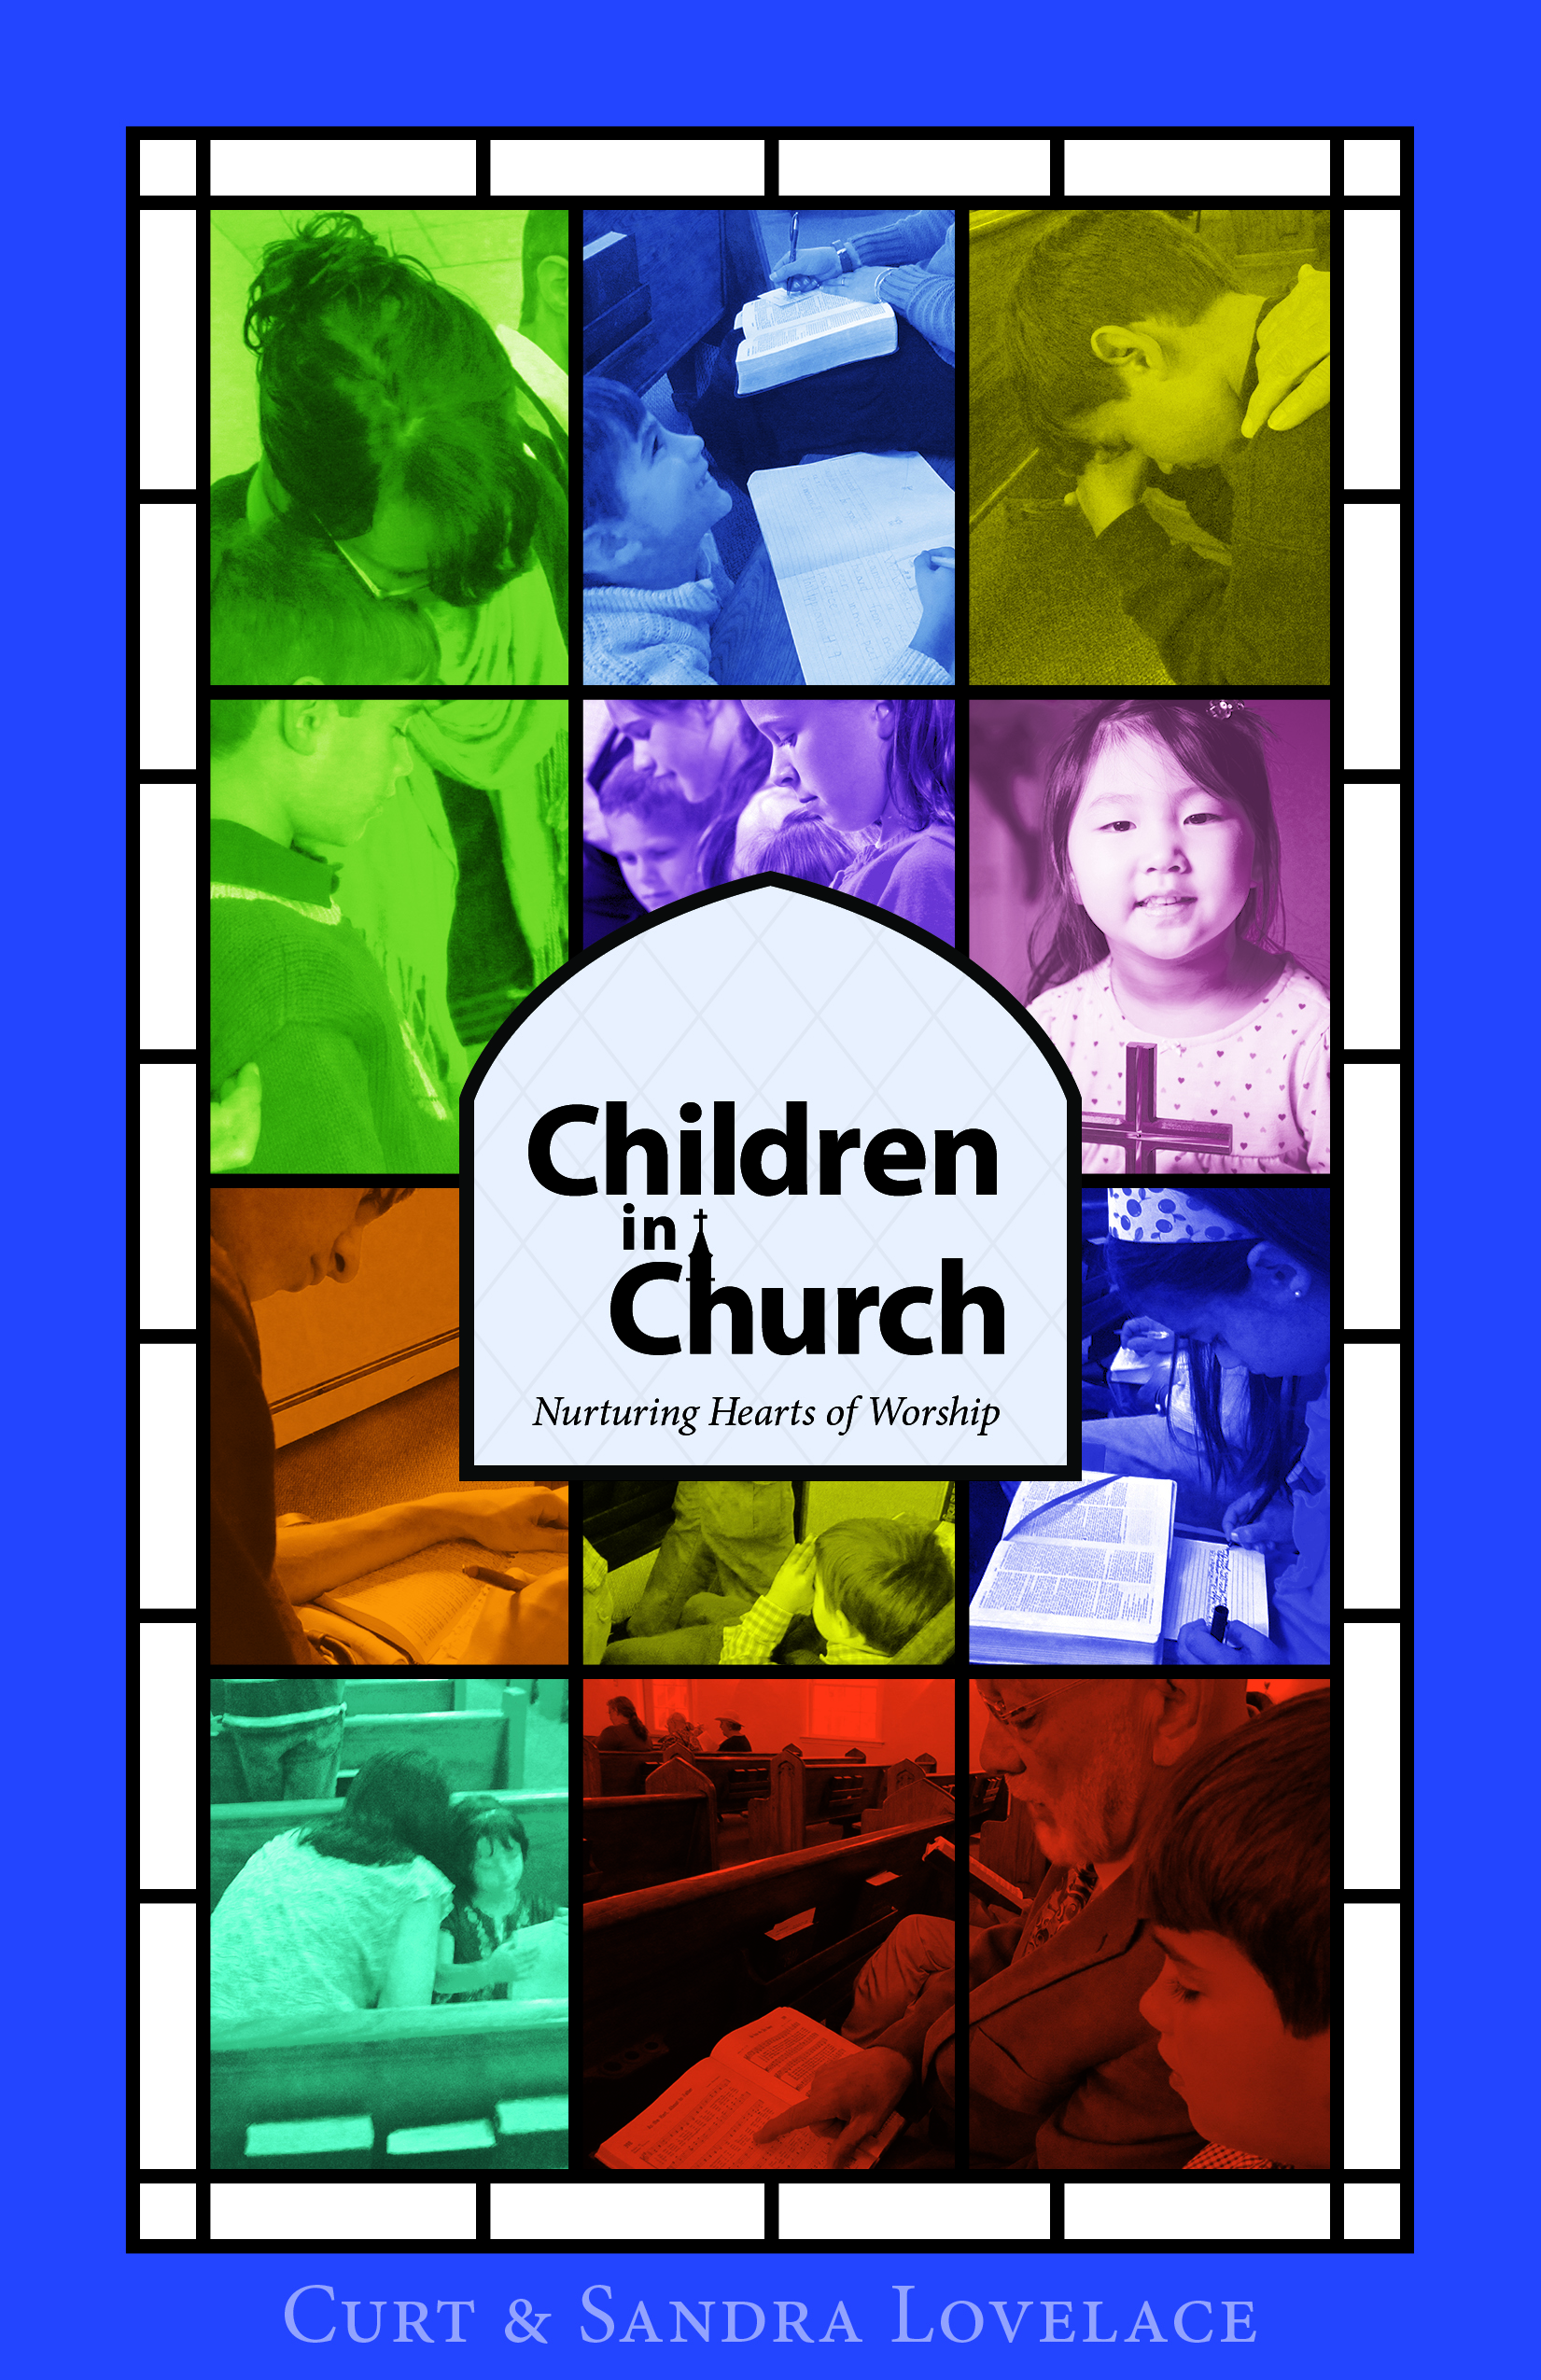 Resolved: Kids in Church